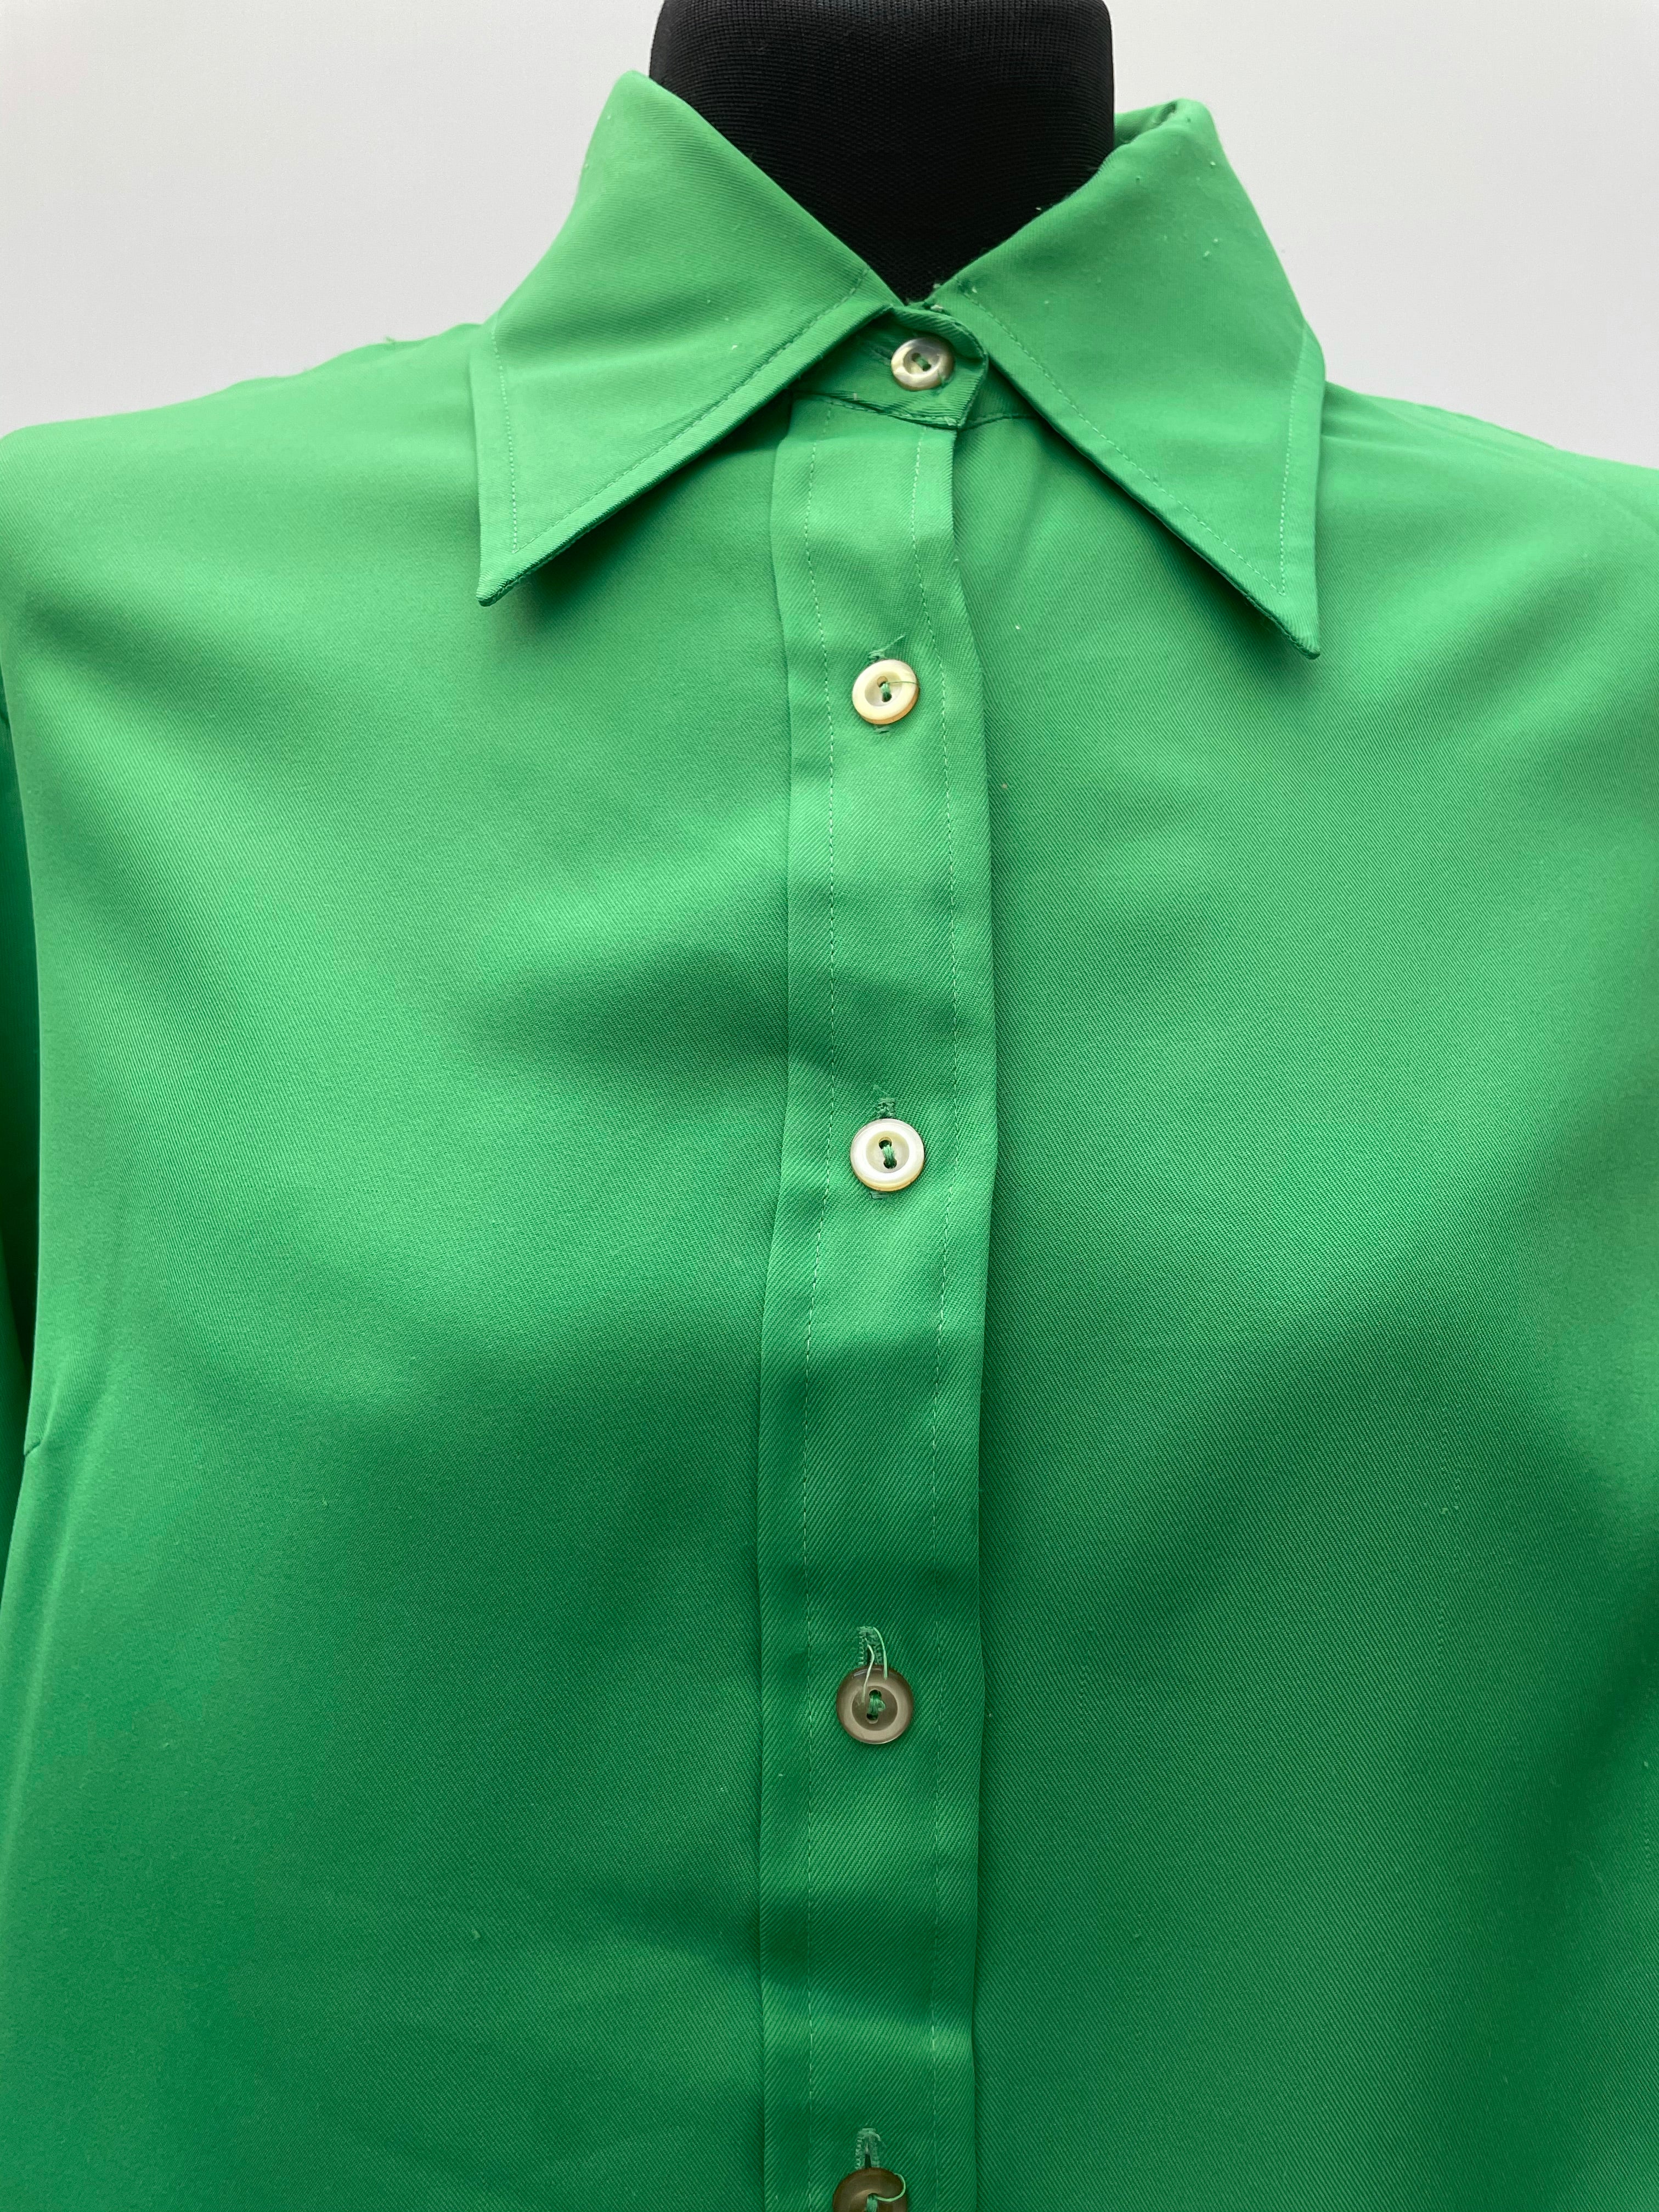 Vintage 1970s Dagger Collar Shirt in Green - Size UK 16